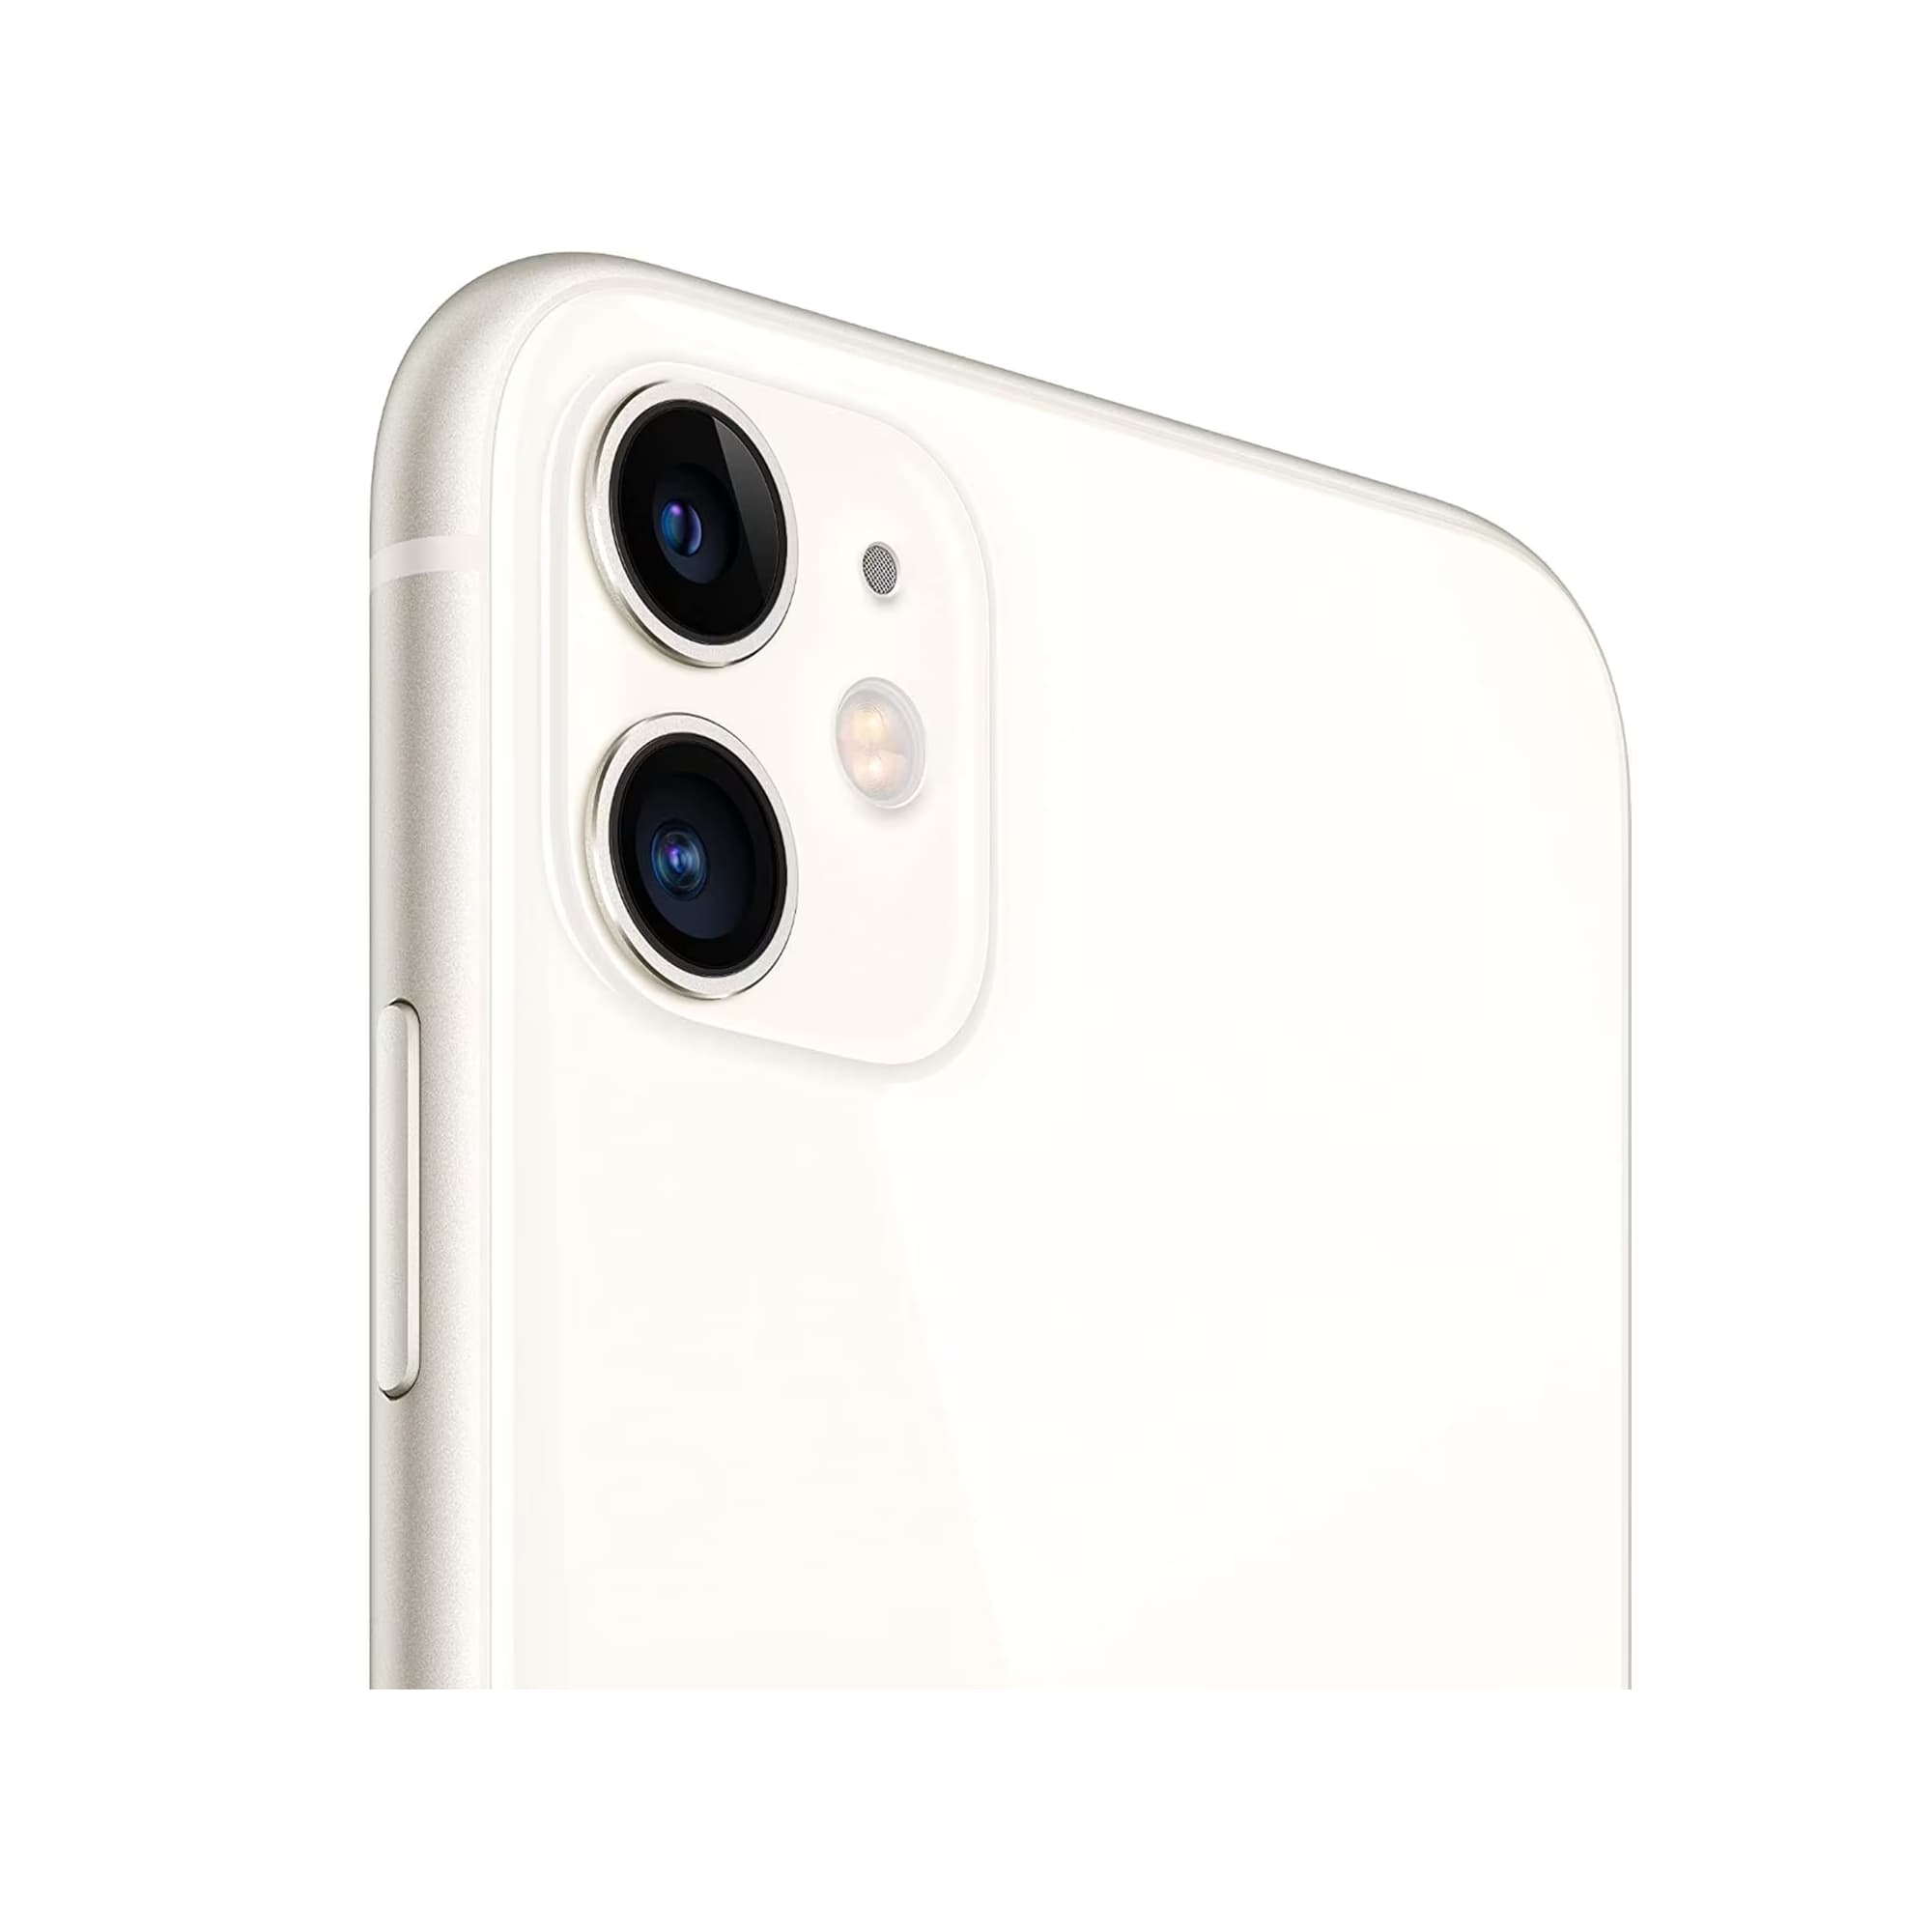 Apple iPhone 11 (64 GB, white, unlocked, refurbished)